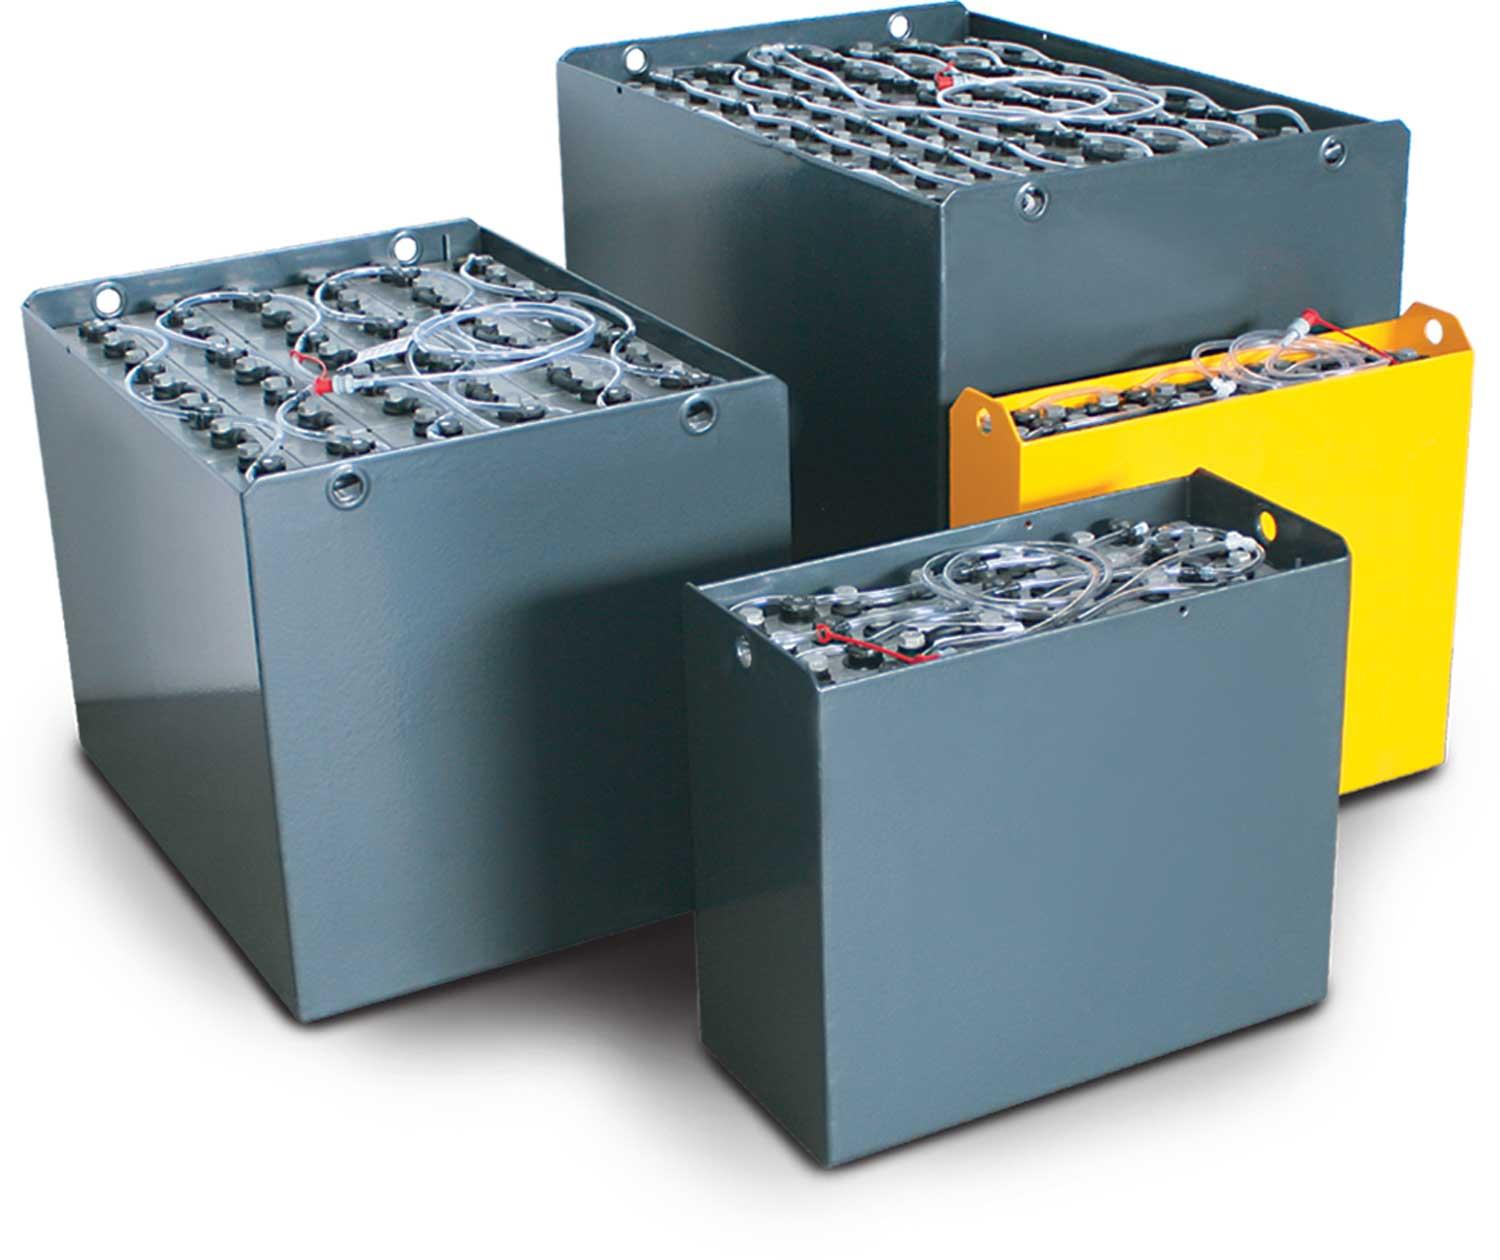 Q-Batteries 48V Gabelstaplerbatterie 5 PzS 575 Ah DIN B (1027 * 526 * 627mm L/B/H) Trog 57017033 inkl. Aquamatik